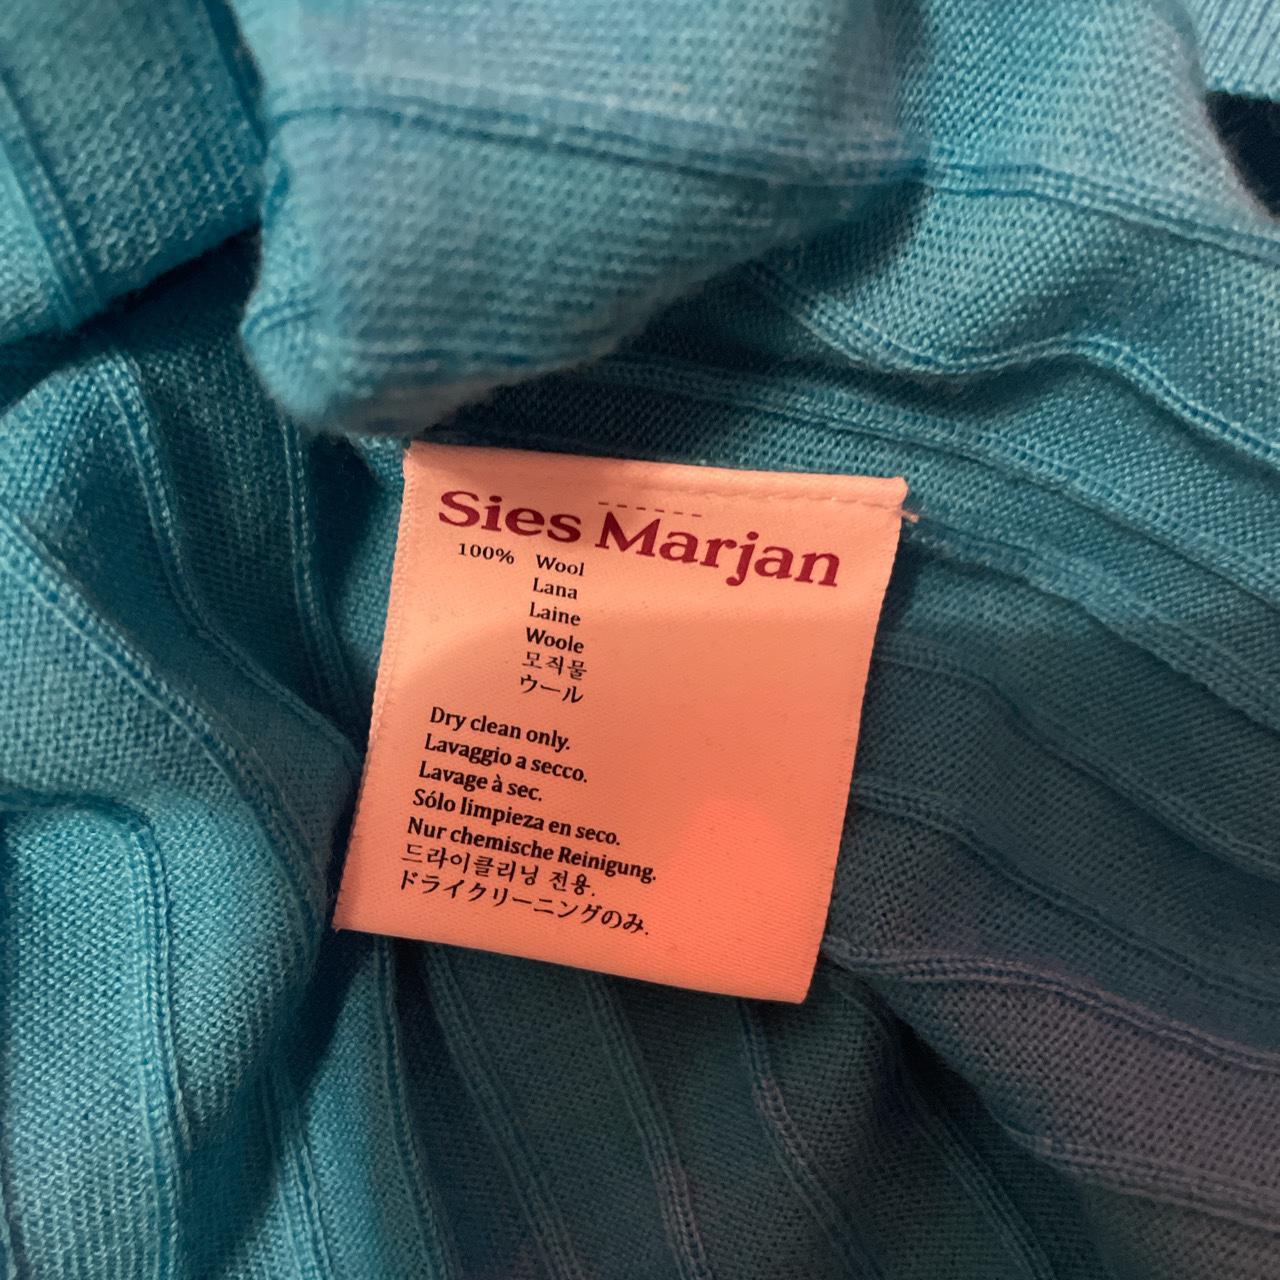 Product Image 3 - Sies marjan bright blue cardigan
Size